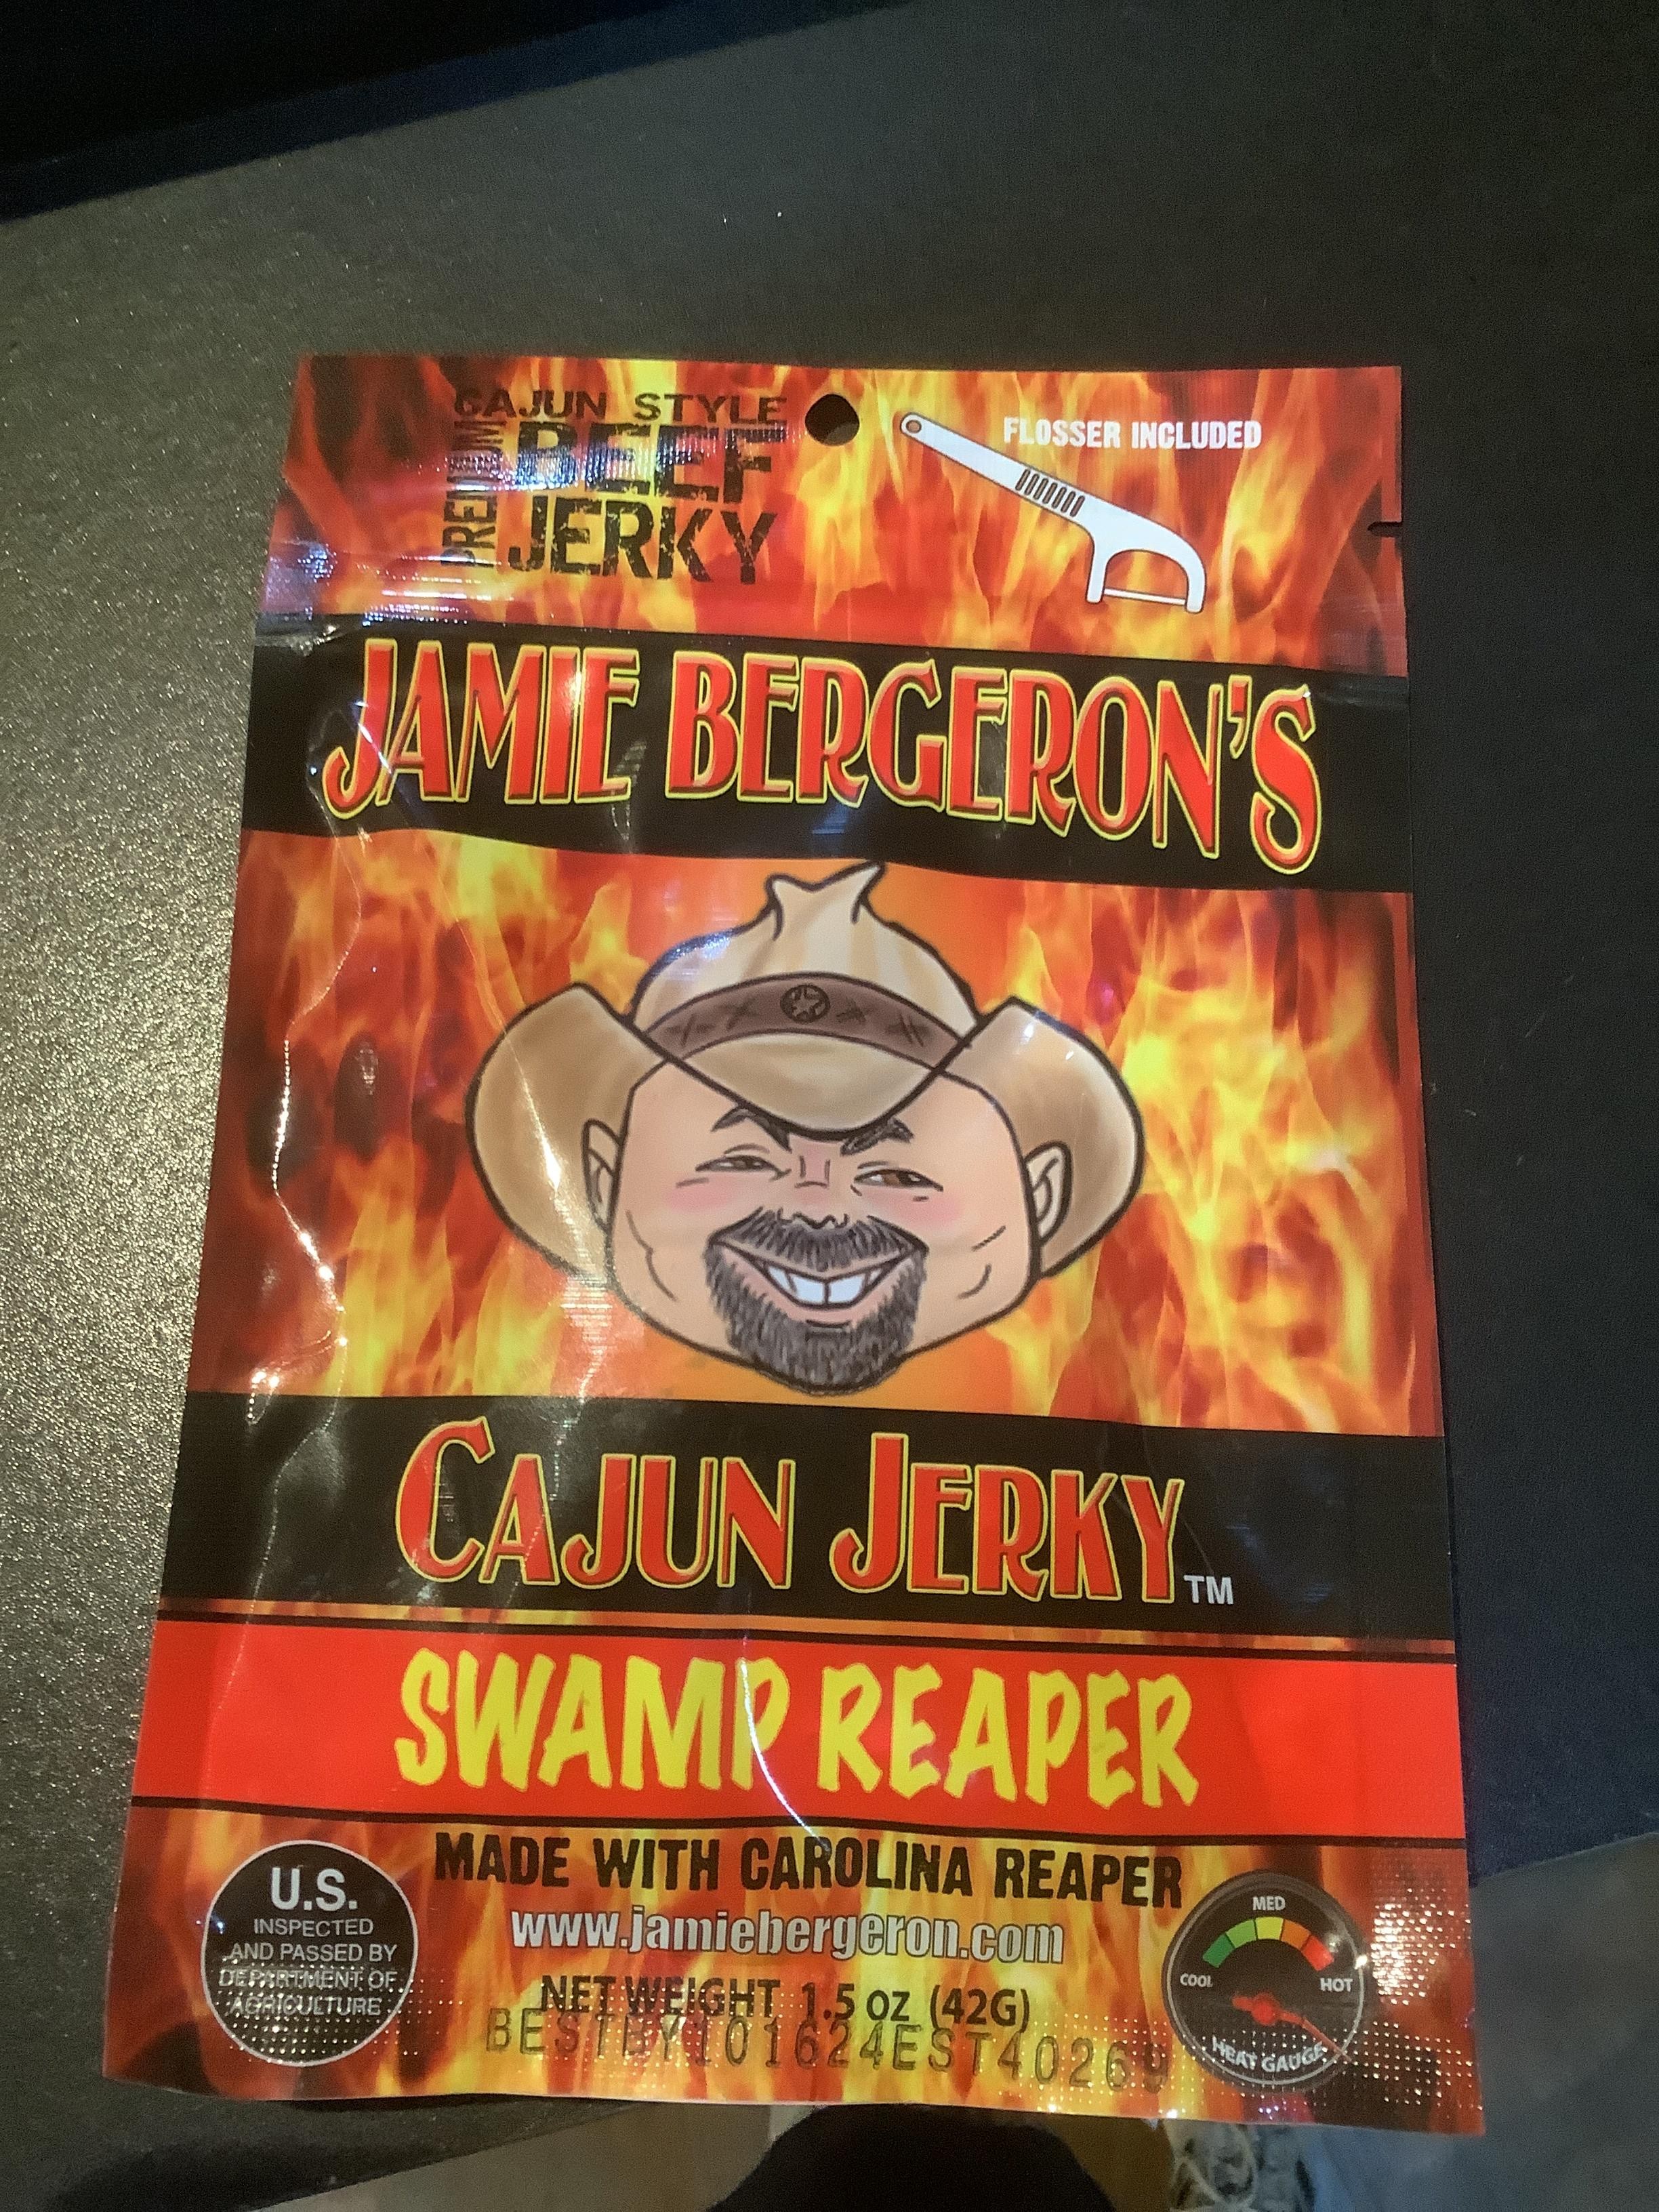 Jamie Bergeron’s Cajun Jerky Swamp Reaper